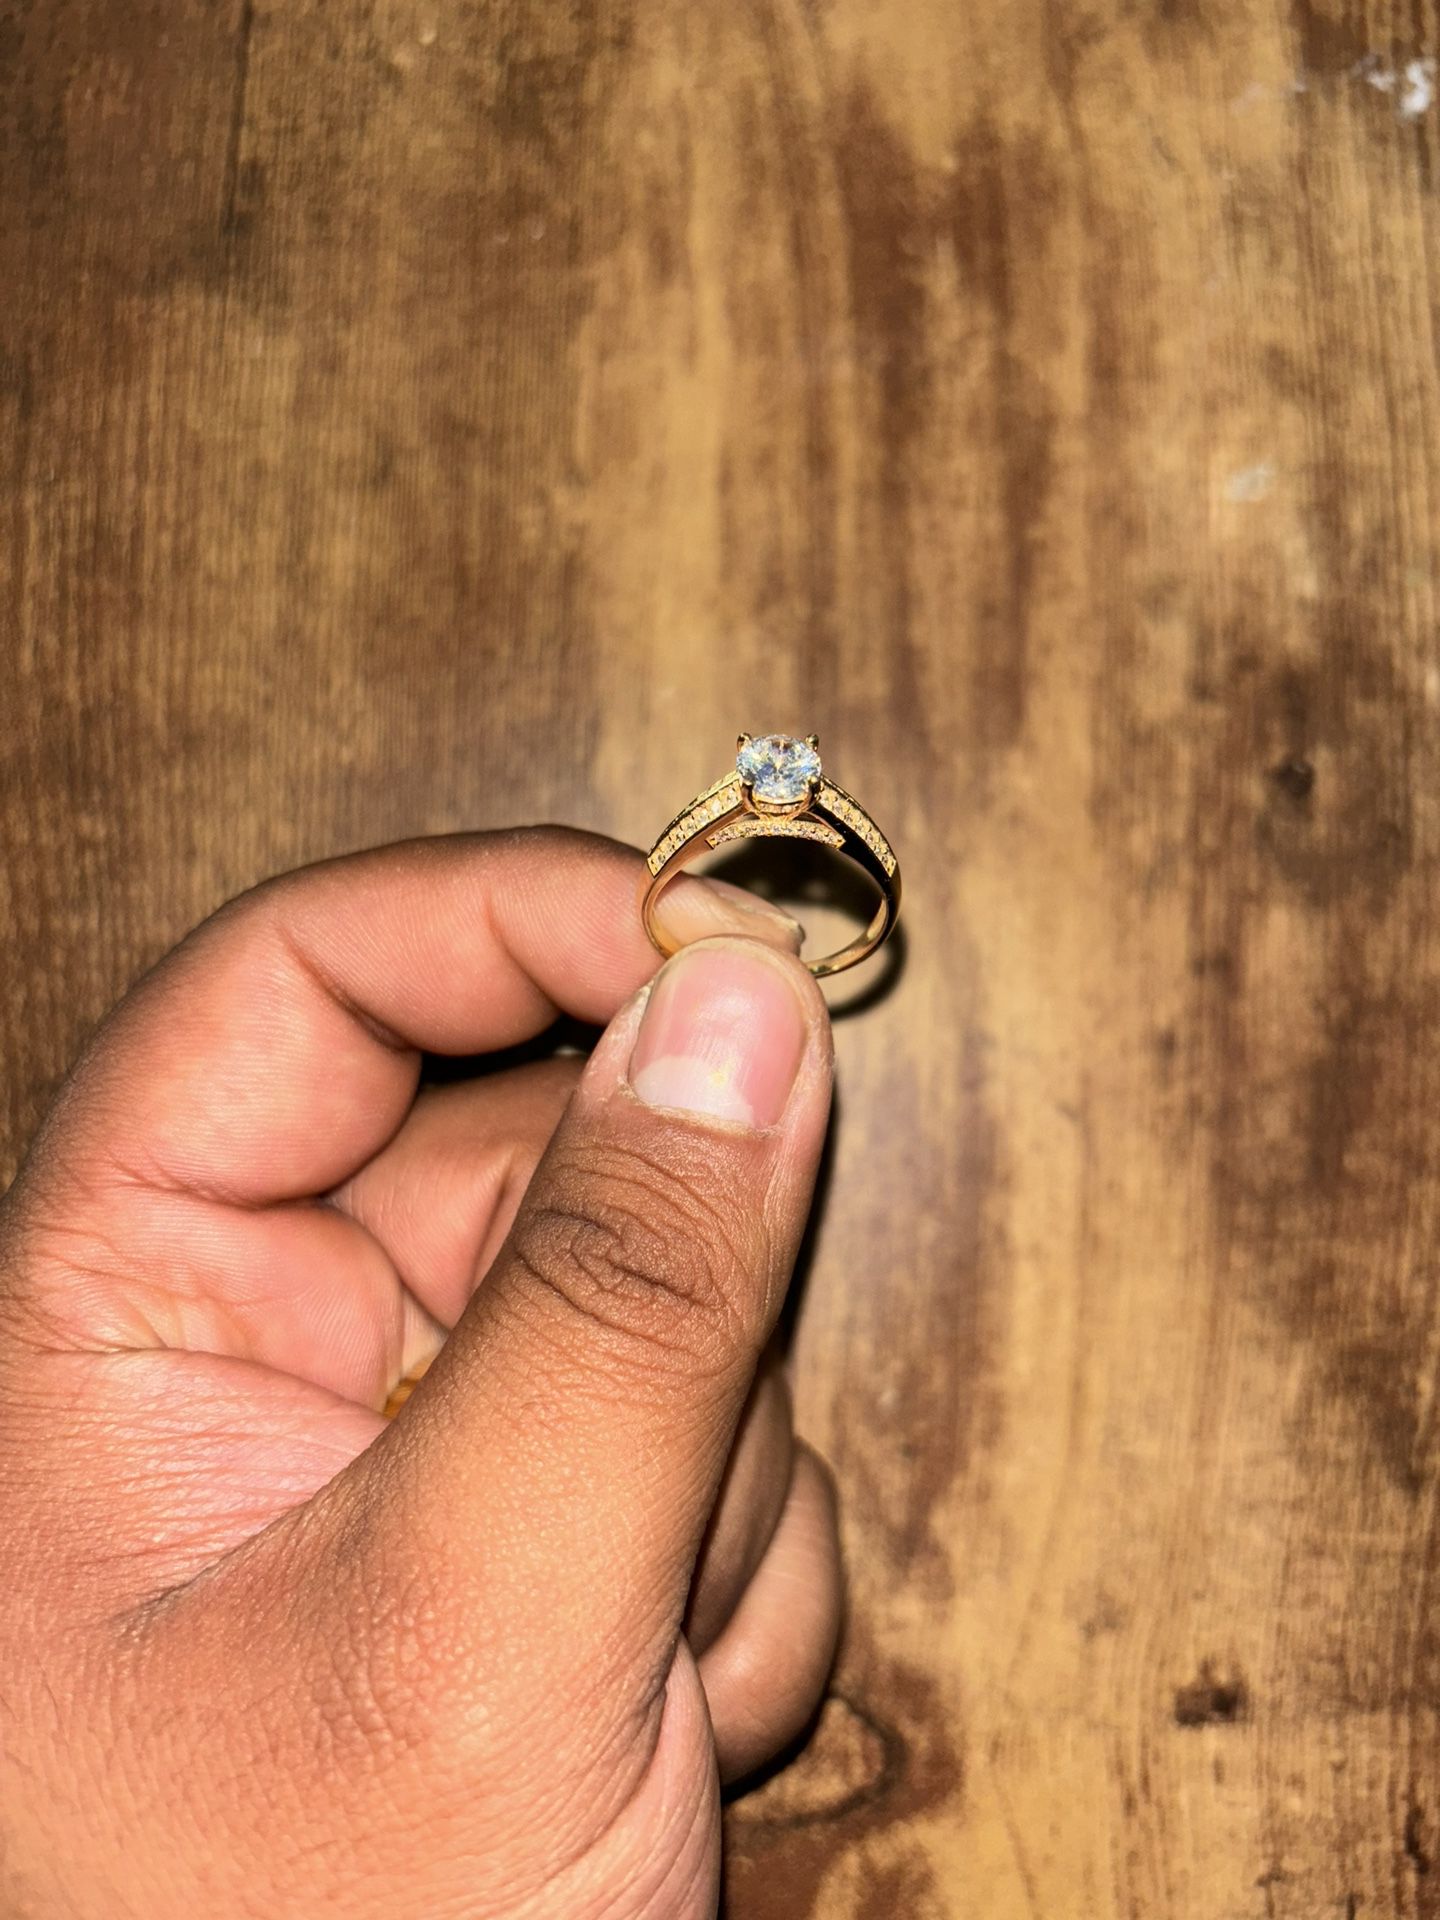 10k gold ring 